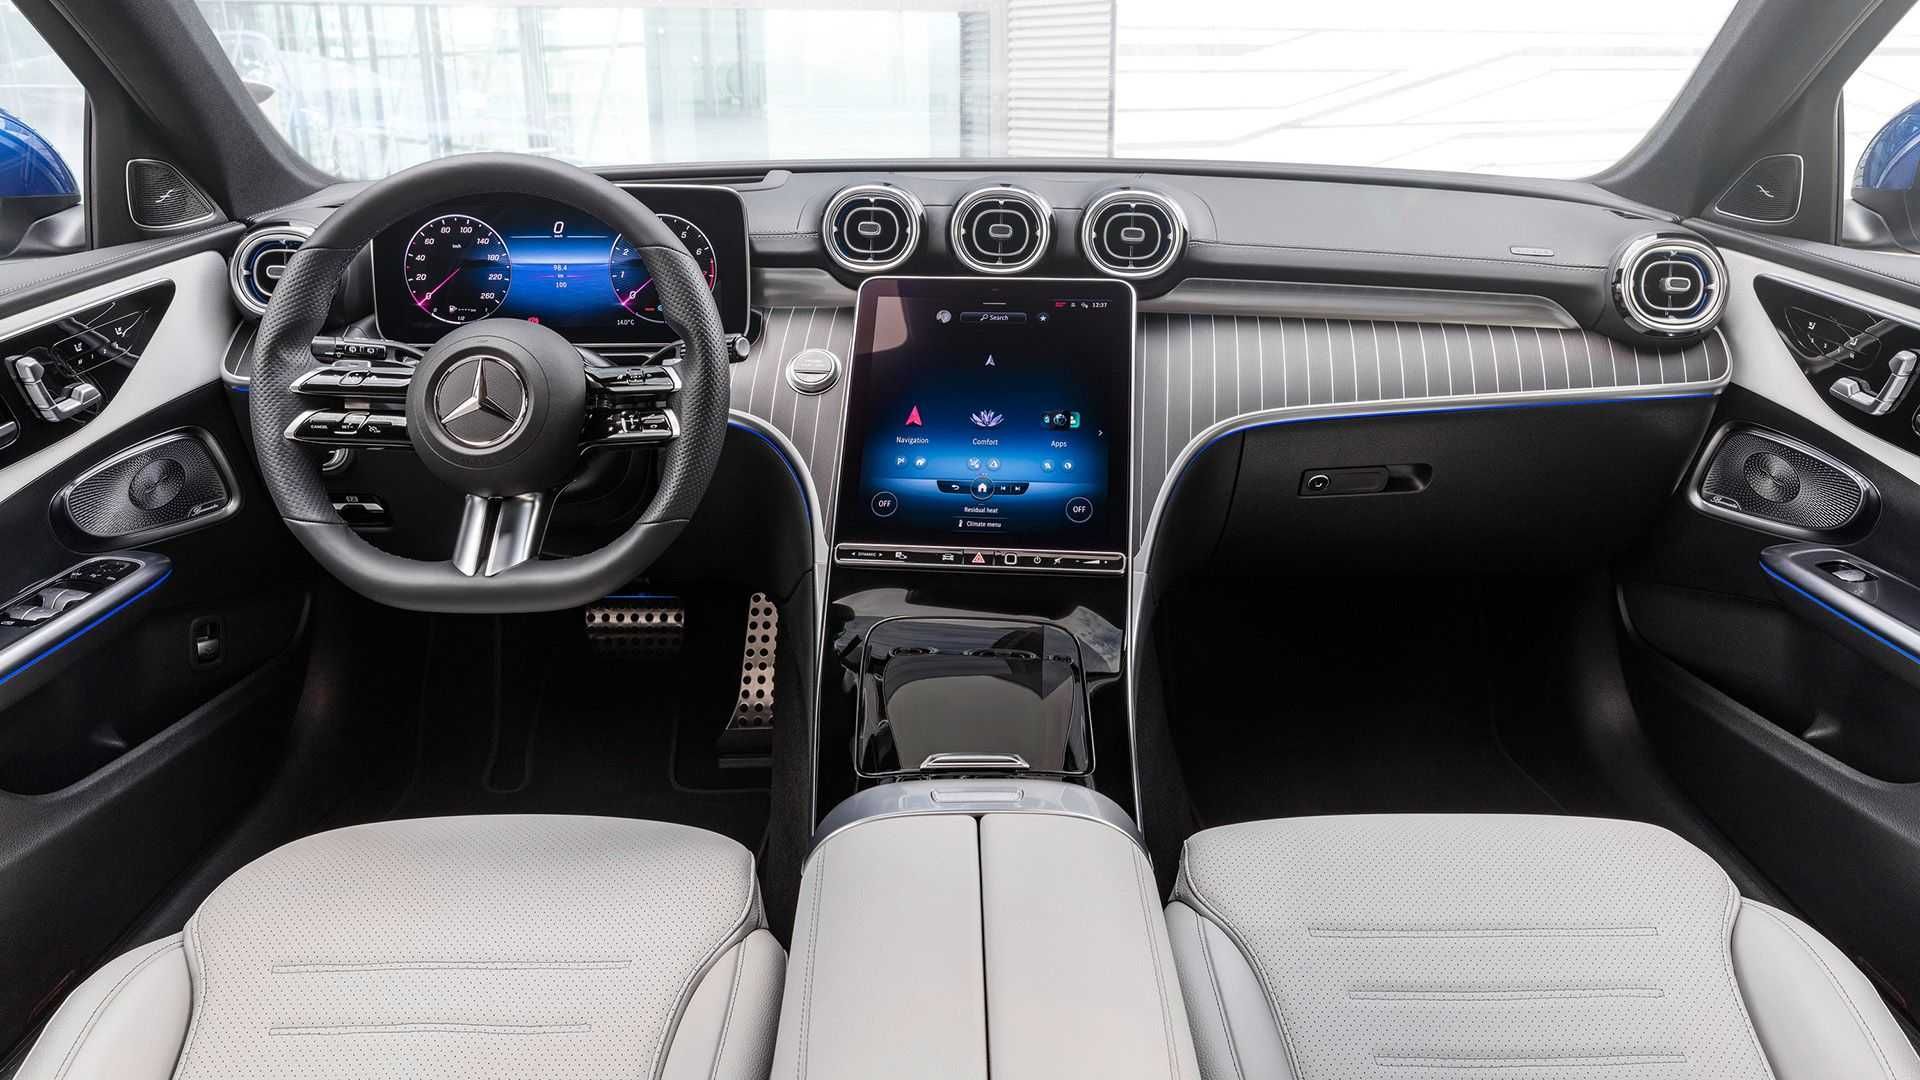 کابین و سیستم سرگرمی استیشن واگن مرسدس بنز سی کلاس / 2022 Mercedes C-Class آبی رنگ